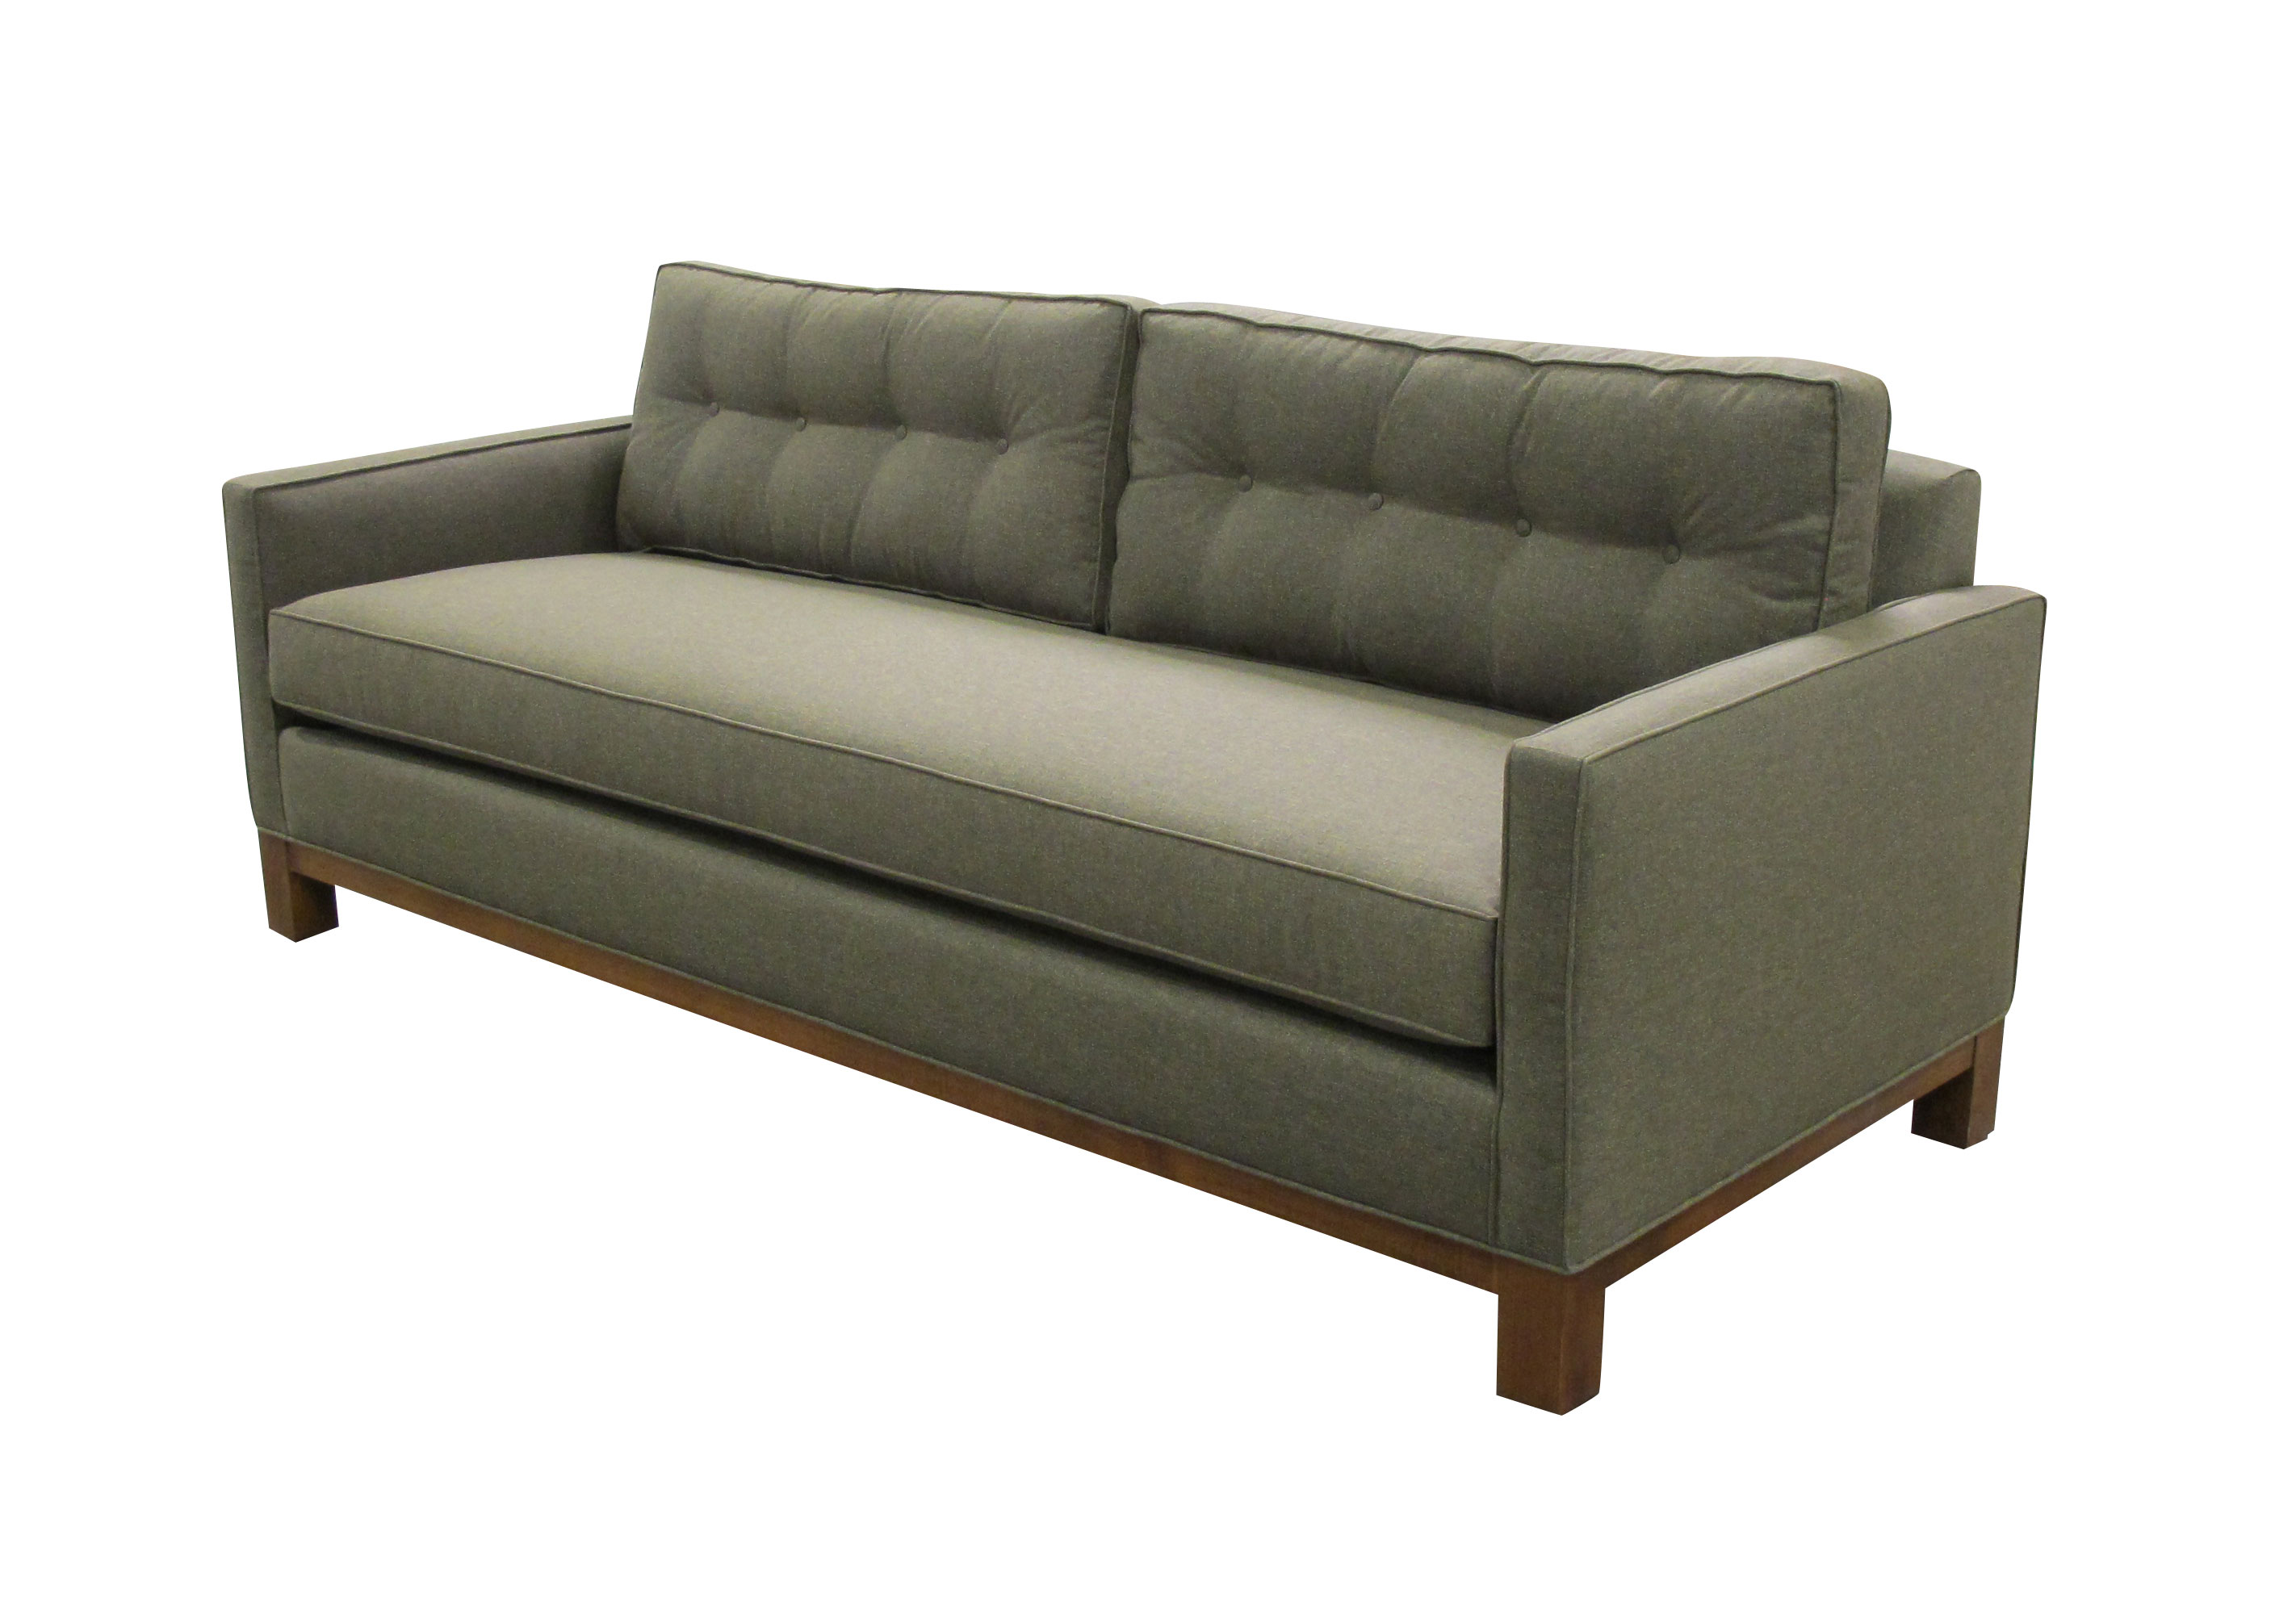 lexington sofa bed amazon